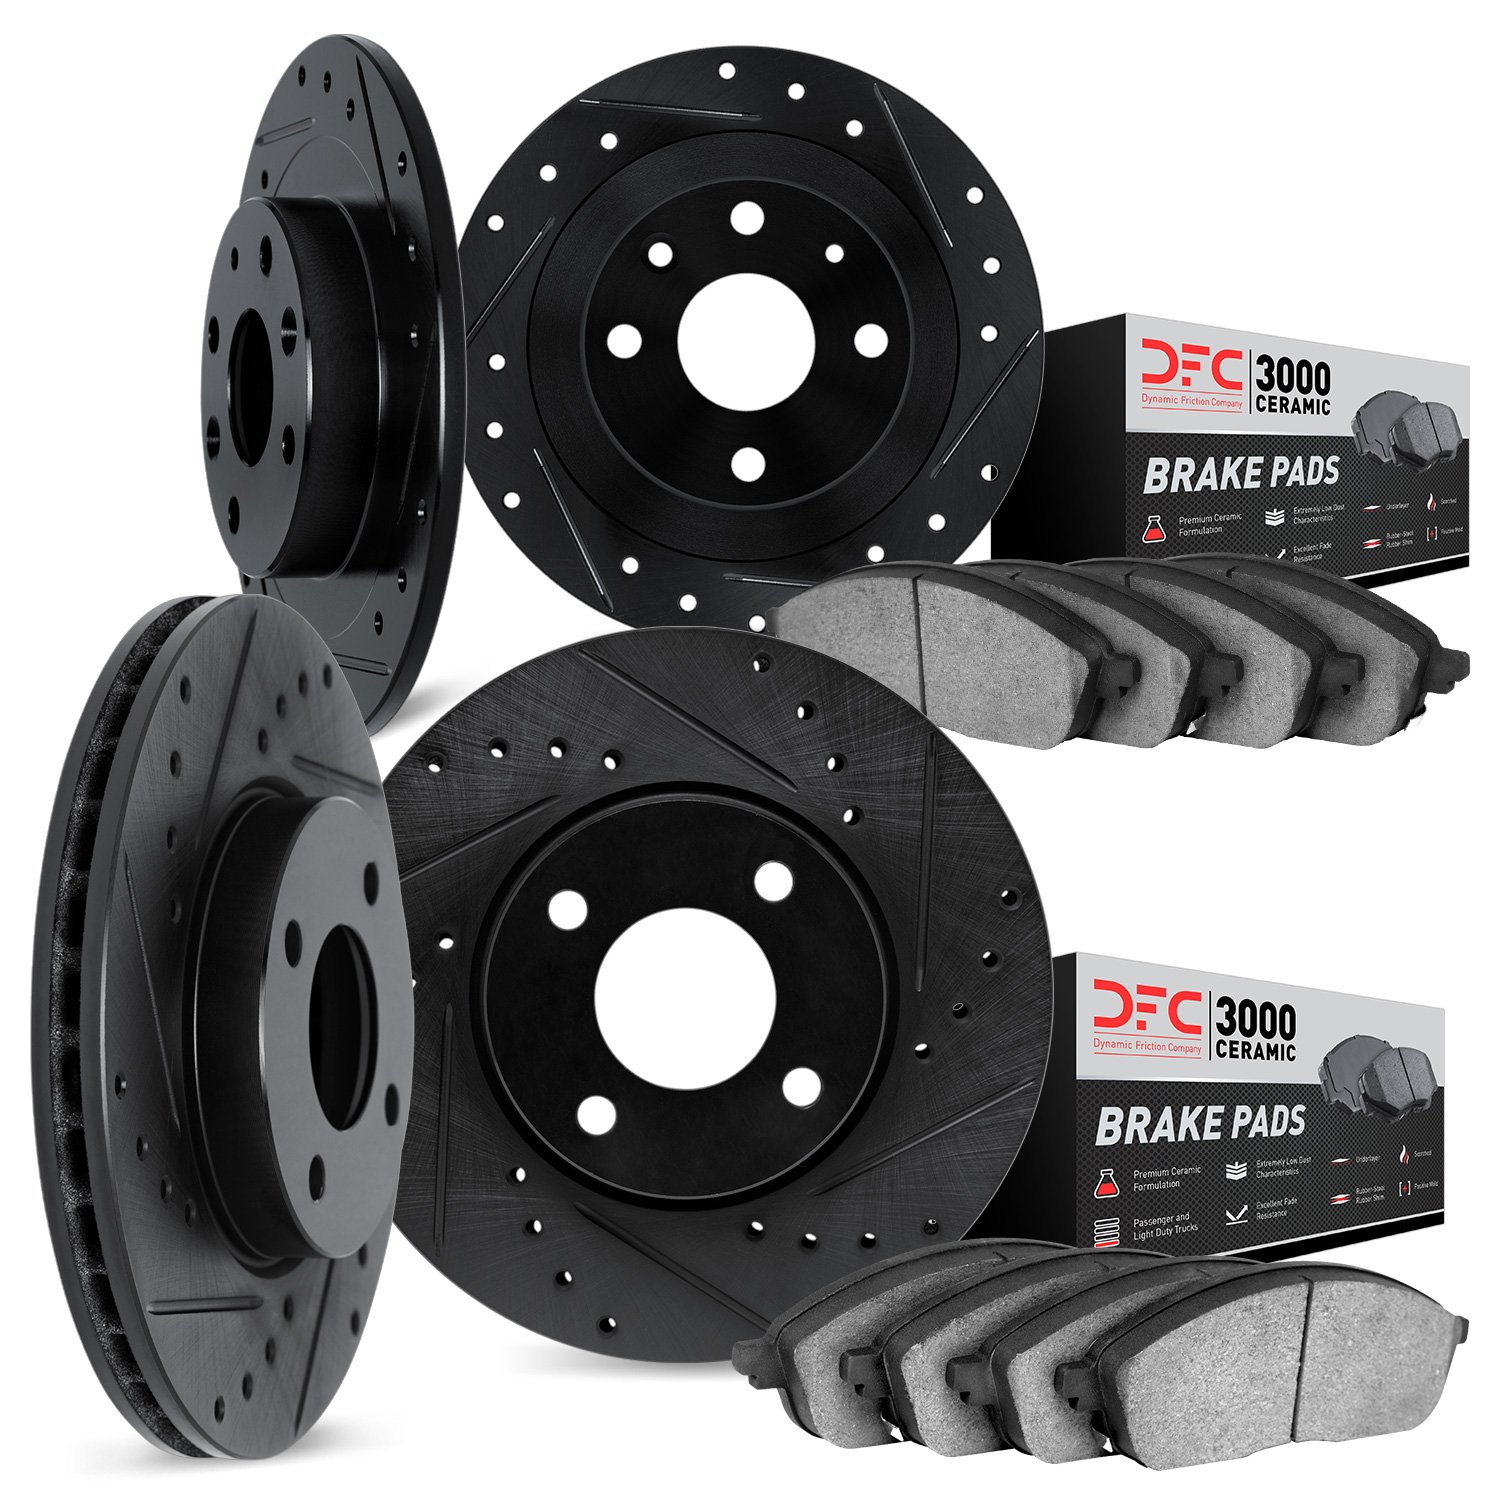 8304-80045 Drilled/Slotted Brake Rotors with 3000-Series Ceramic Brake Pads Kit [Black], Fits Select Multiple Makes/Models, Posi